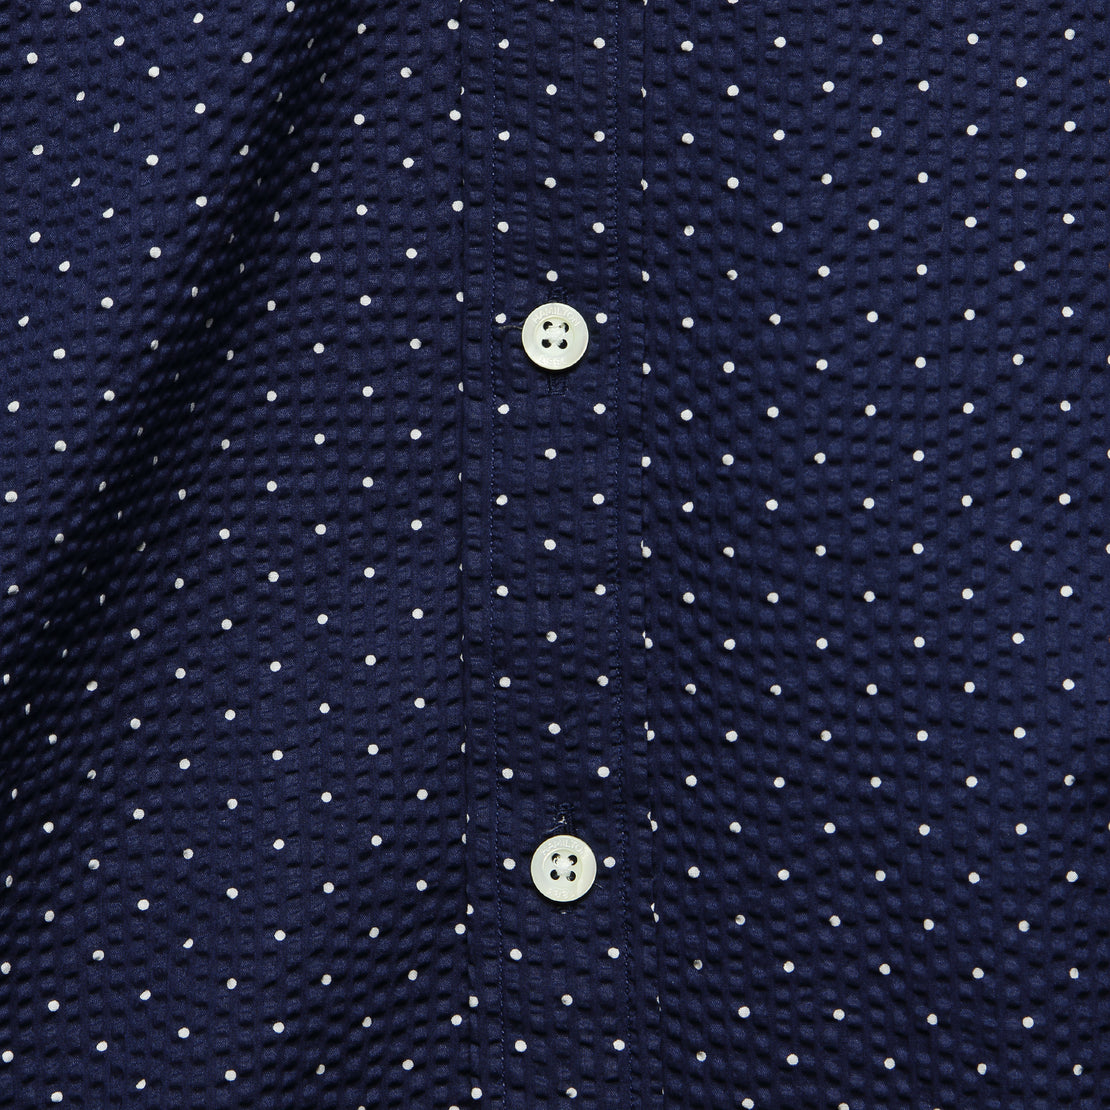 Hamilton - L/S Dot Print Seersucker Shirt, SS19 - Hamilton Shirt Co. - STAG Provisions - Tops - L/S Woven - Dot